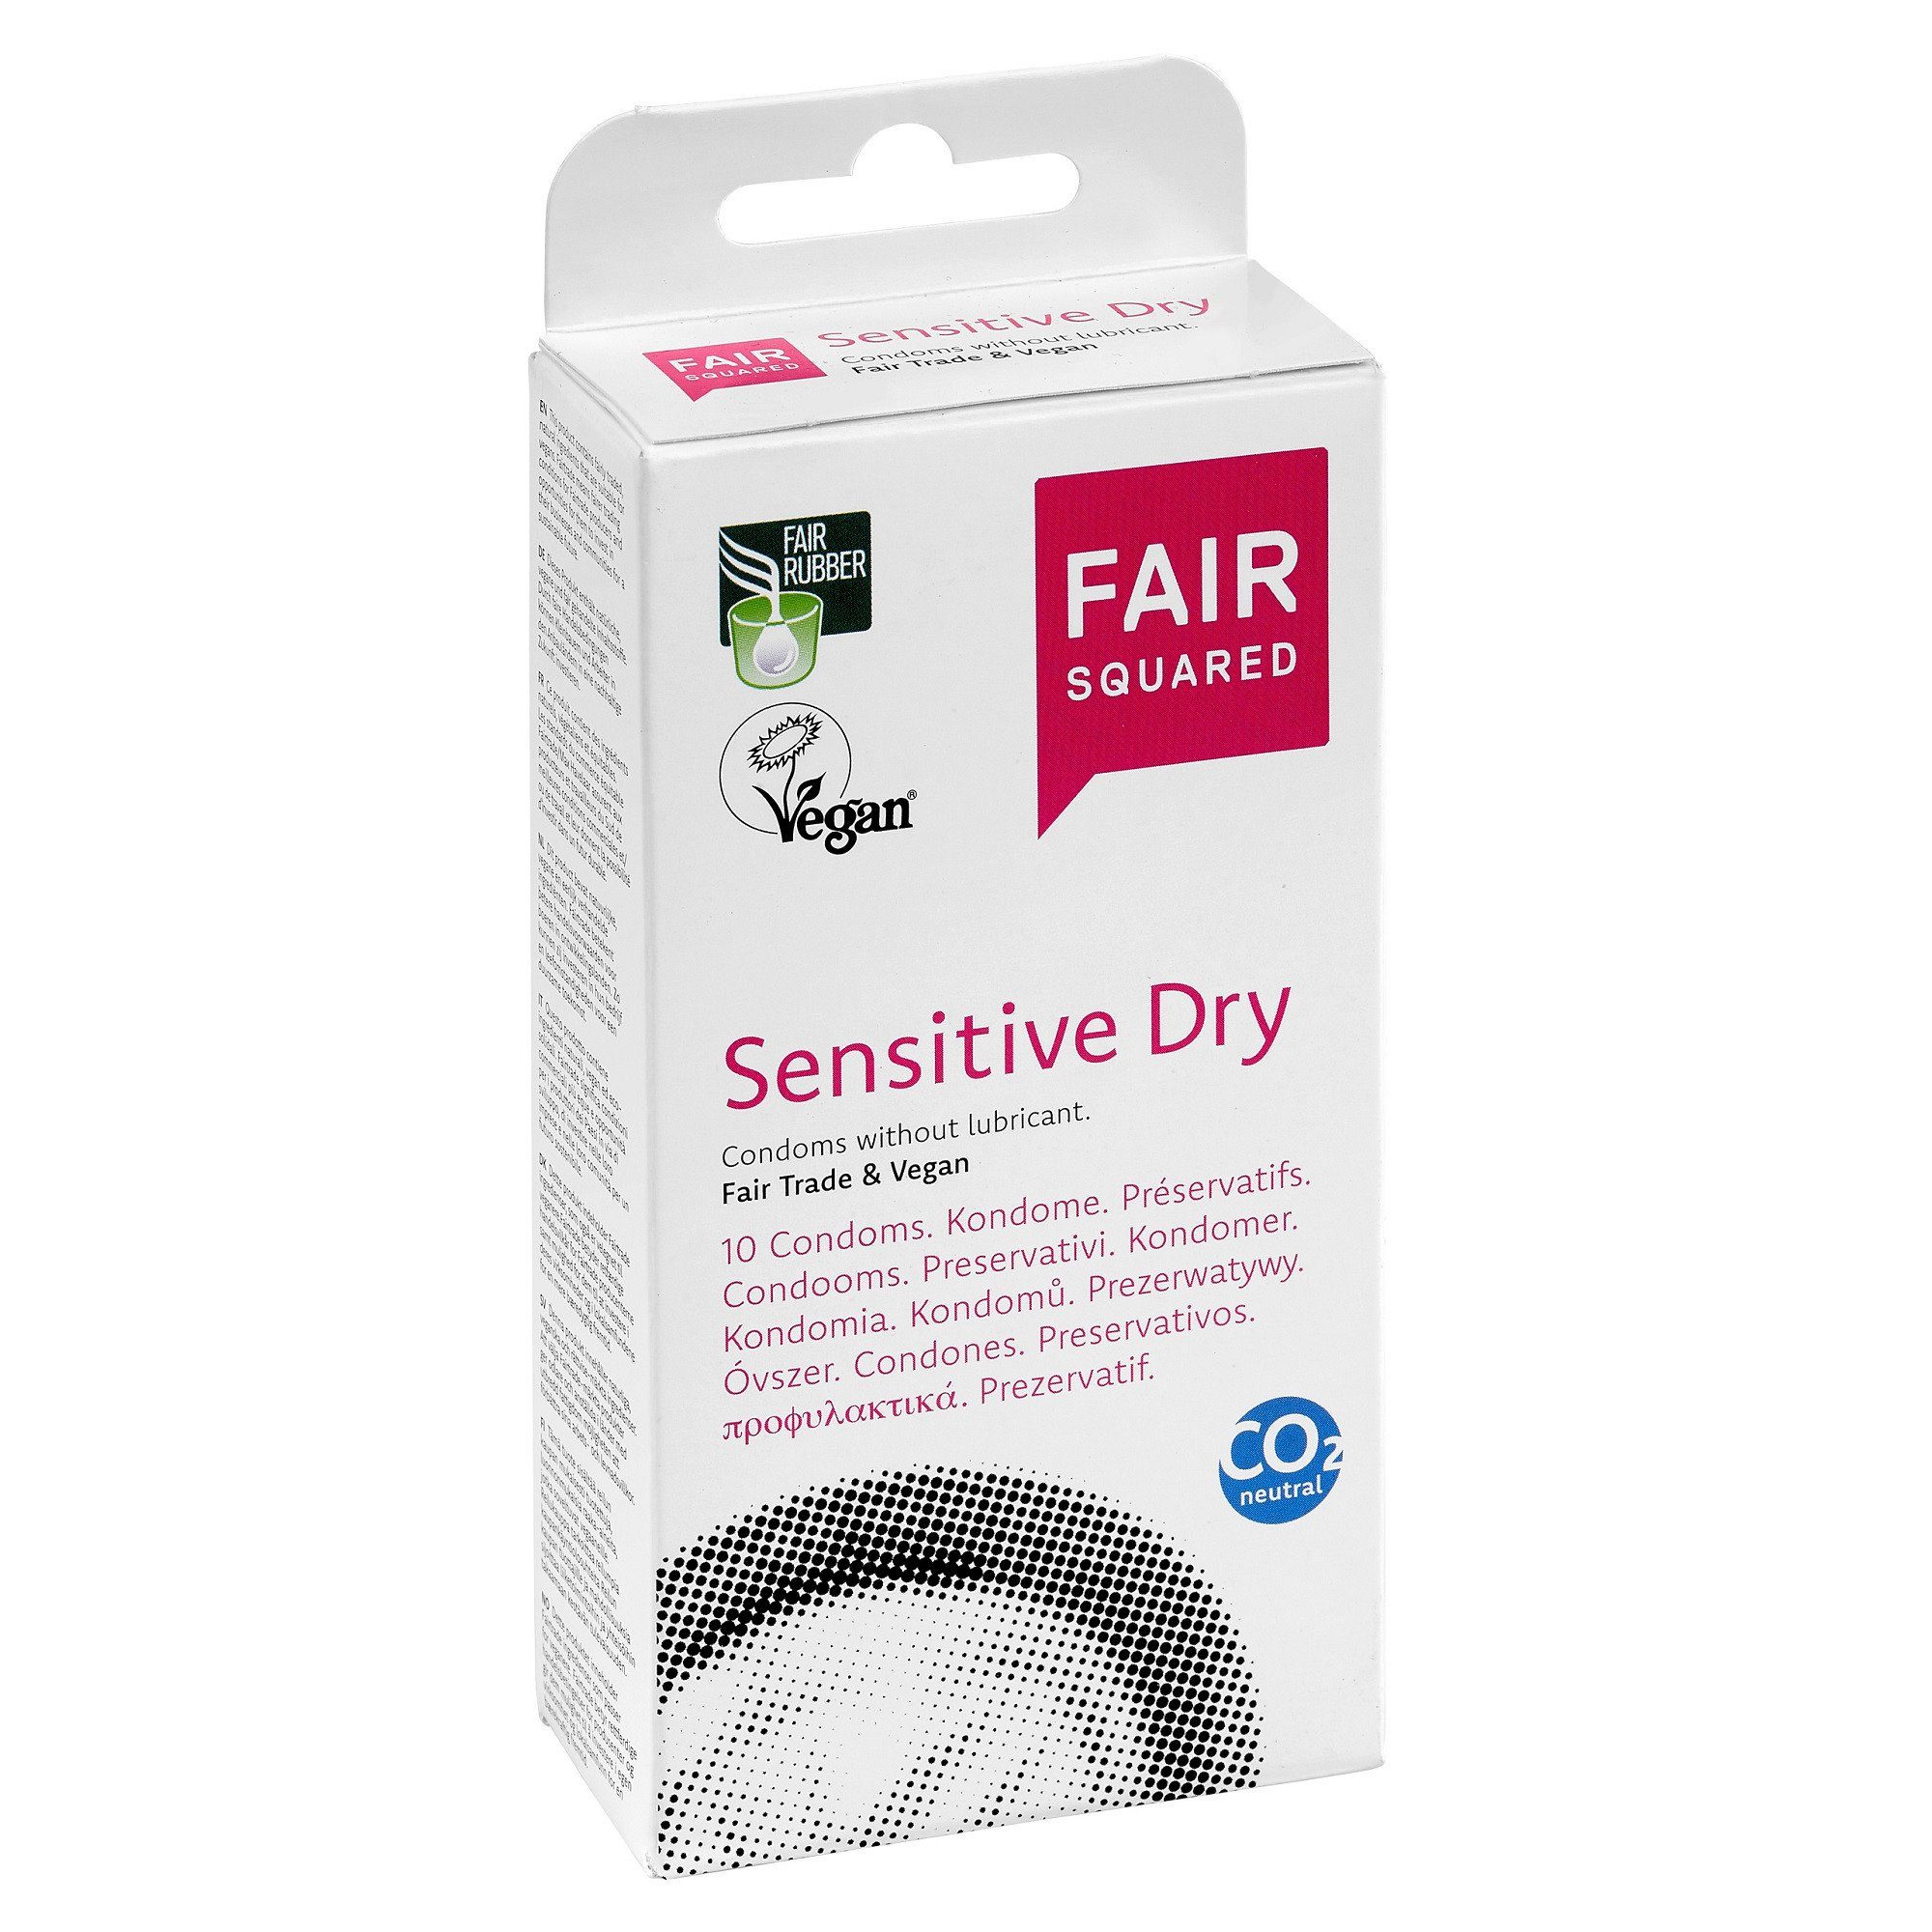 fair Fair – – aus Vegane Naturkautschuk SQUARED Dry Kondom 100er Kondome gefühlsecht gehandeltem Squared Sensitive FAIR hauchzart 53 mm Kondome Kondome